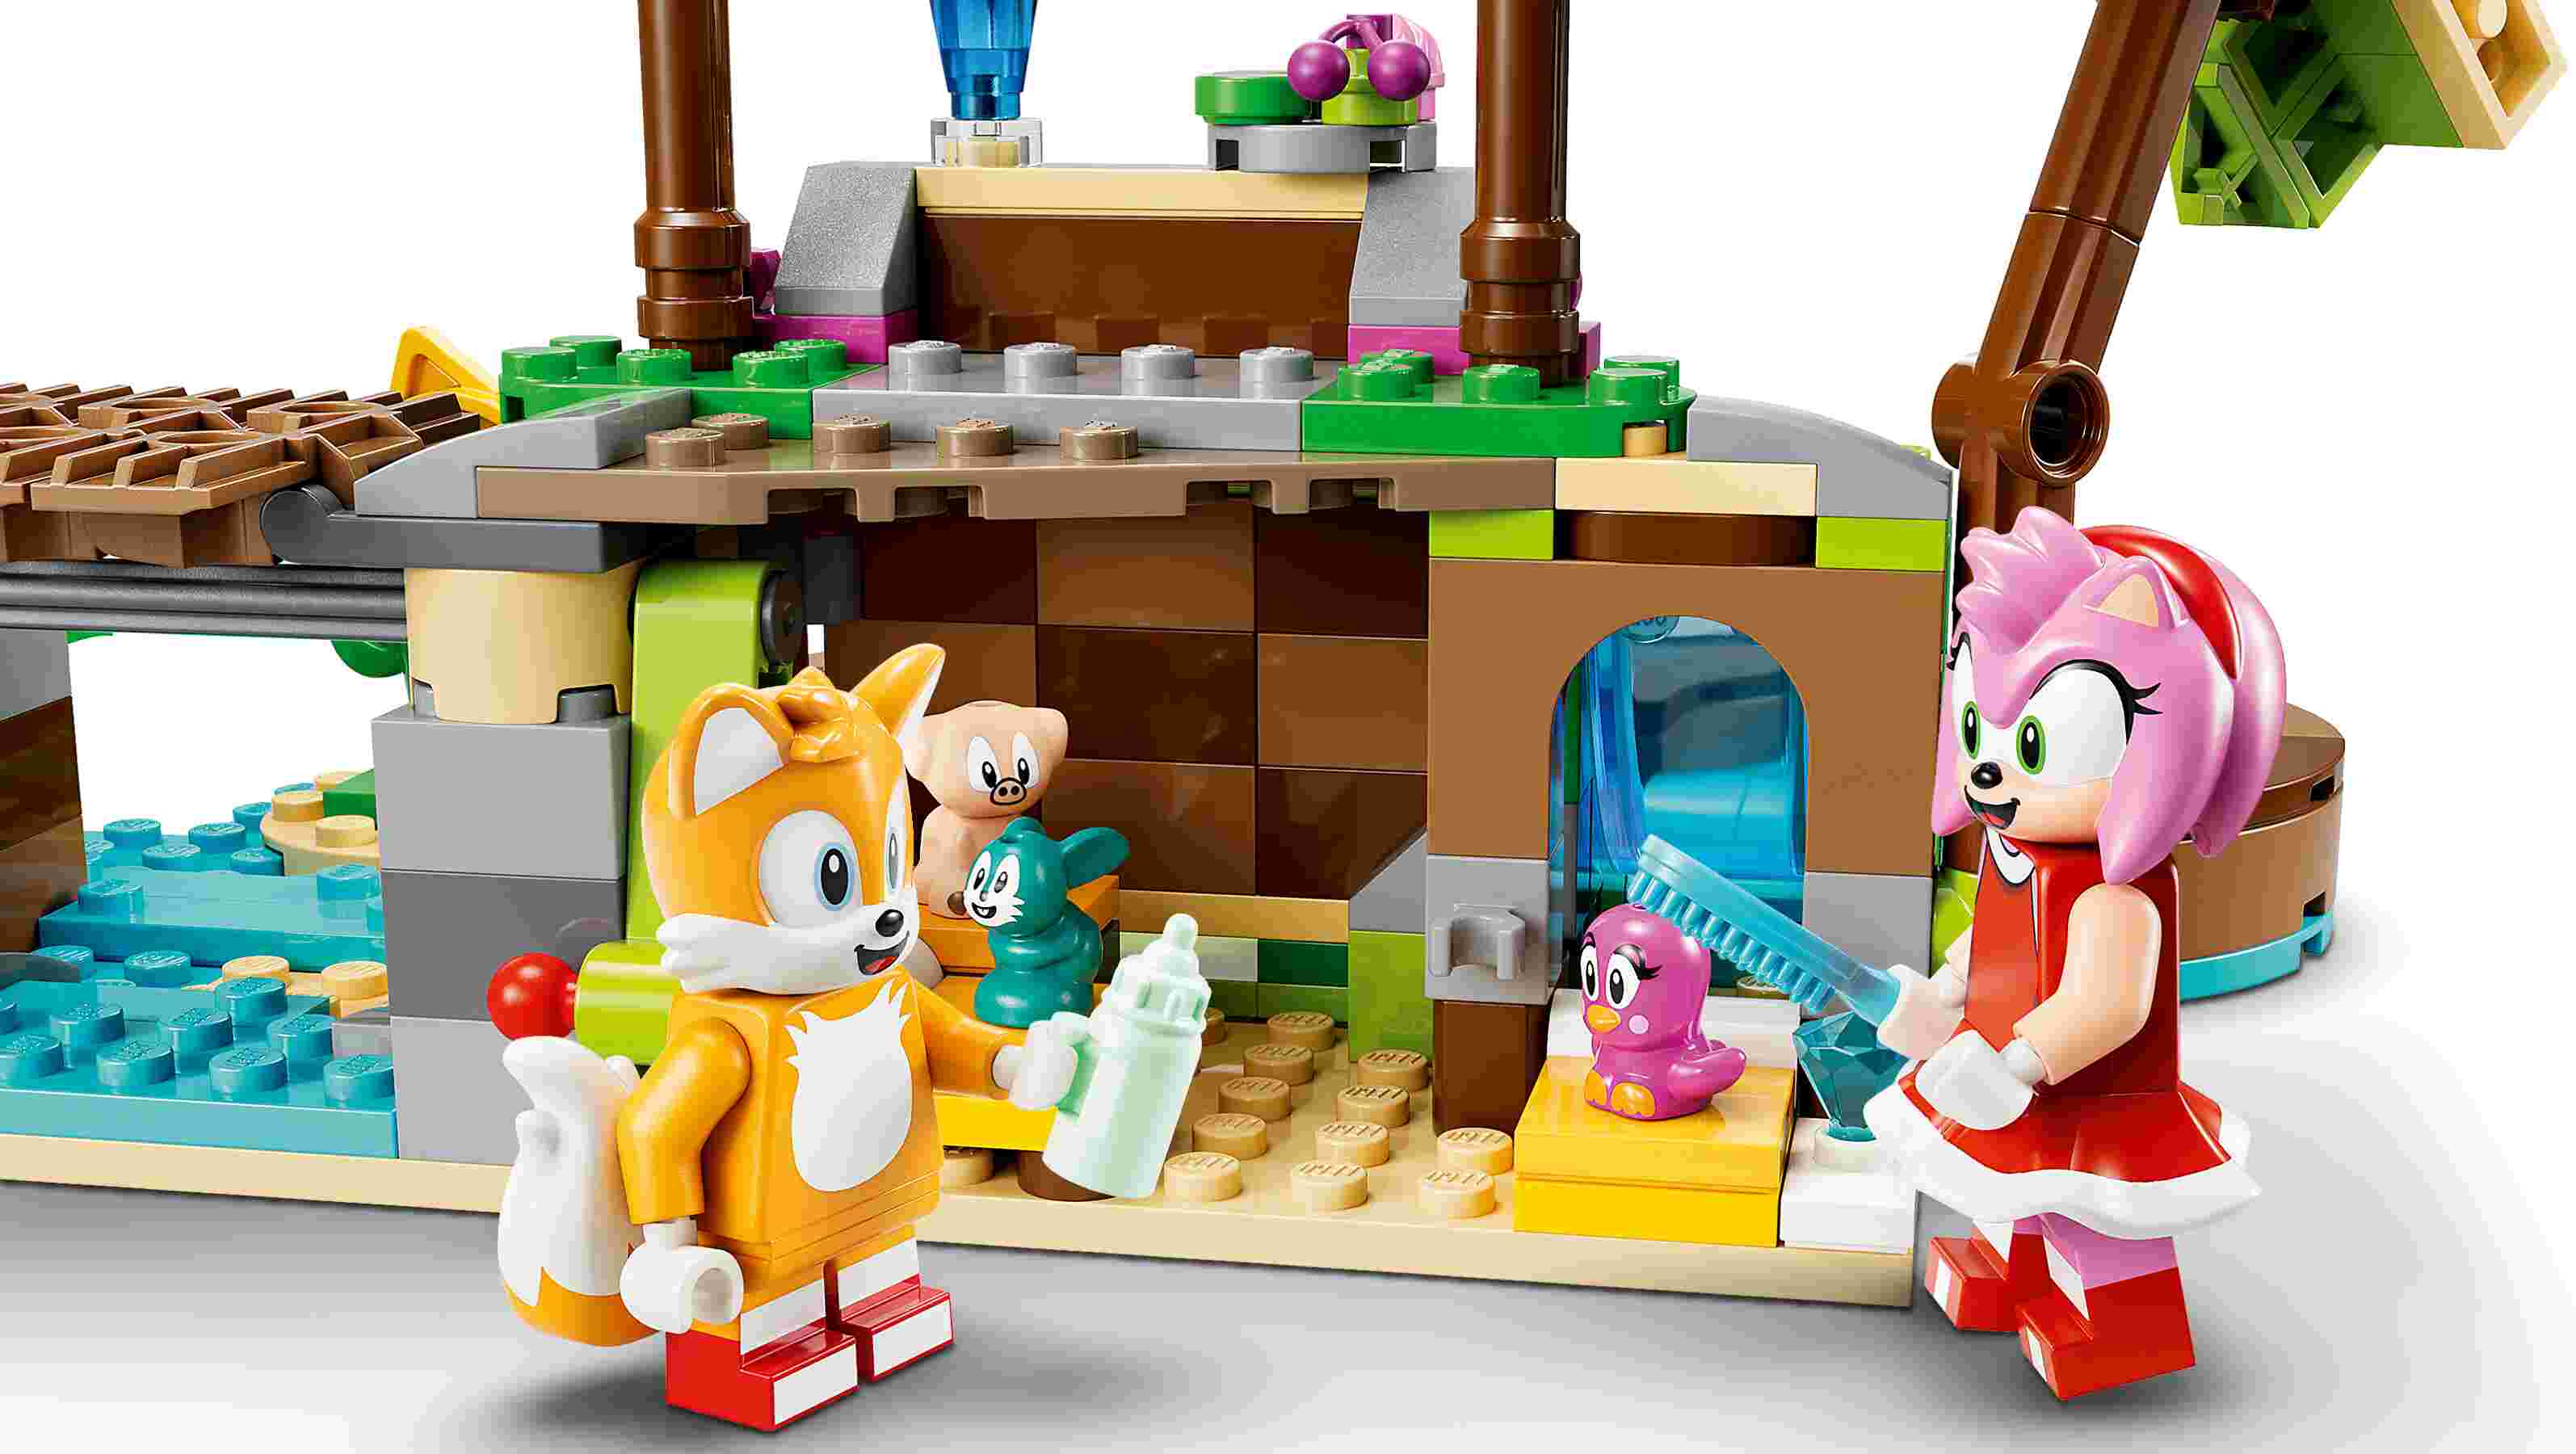 LEGO 76992 Sonic Amys Tierrettungsinsel, 6 Charaktere